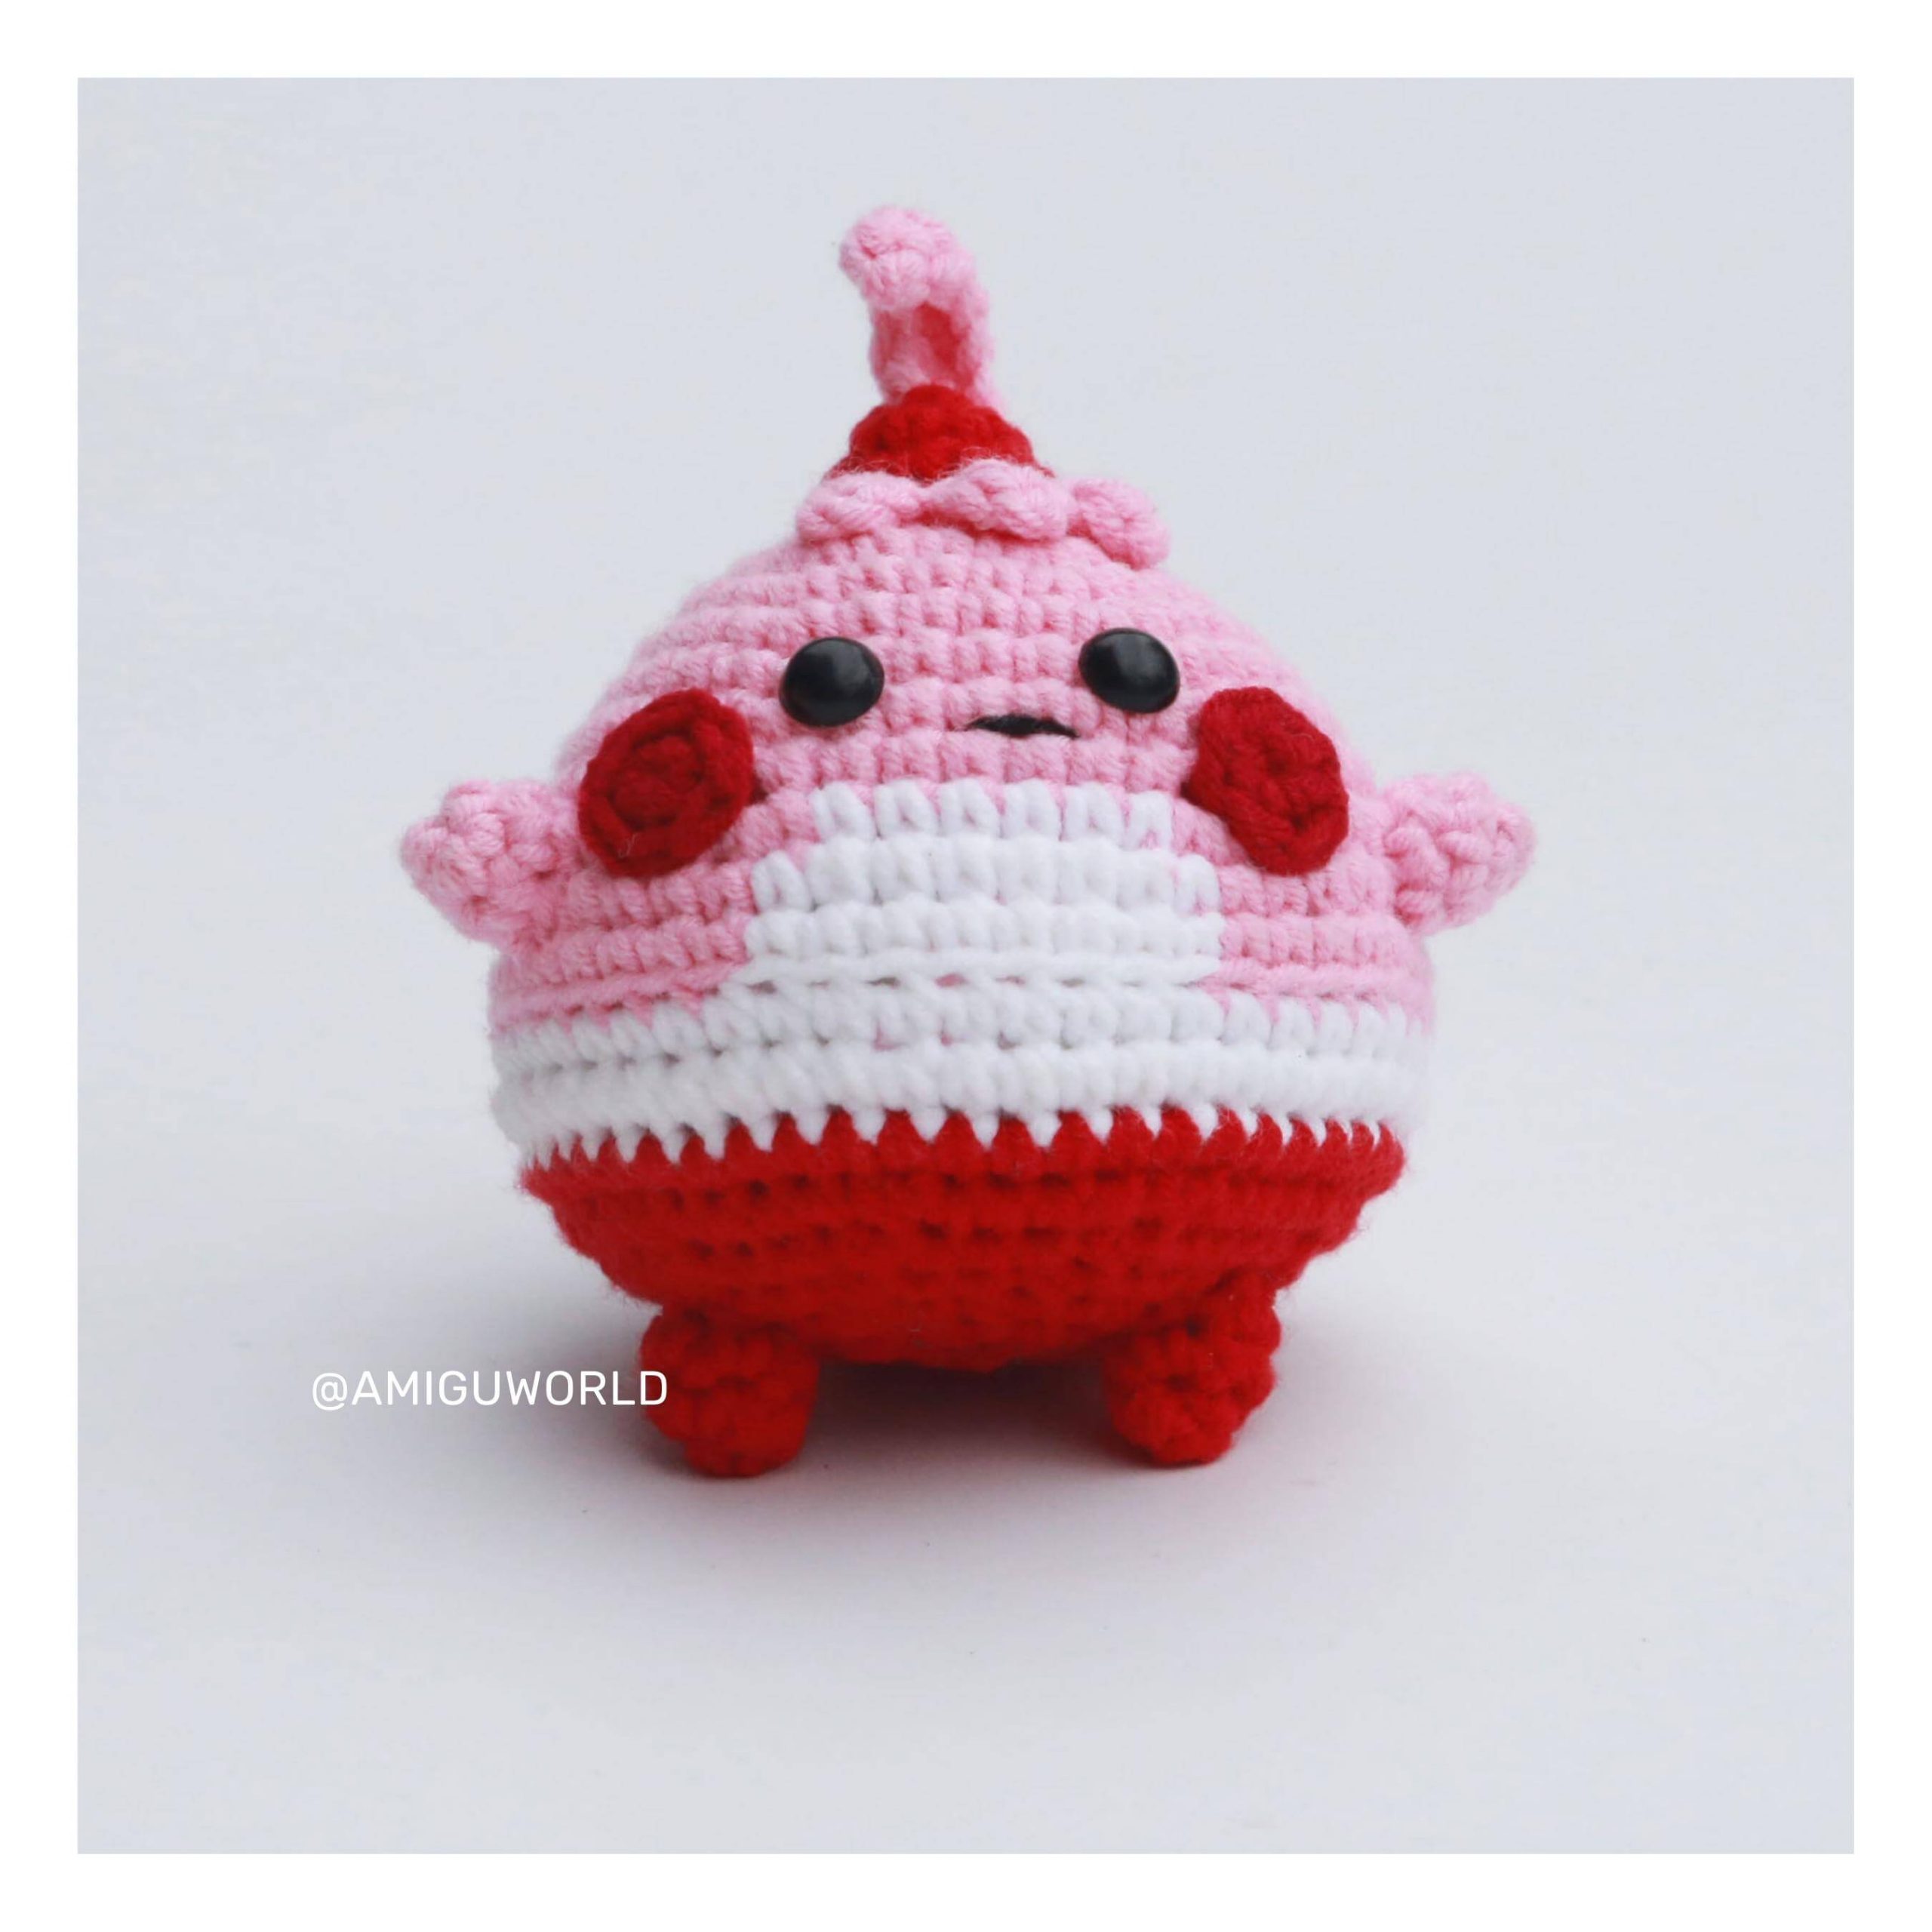 Happiny-amigurumi-crochet-pattern-amiguworld (10)